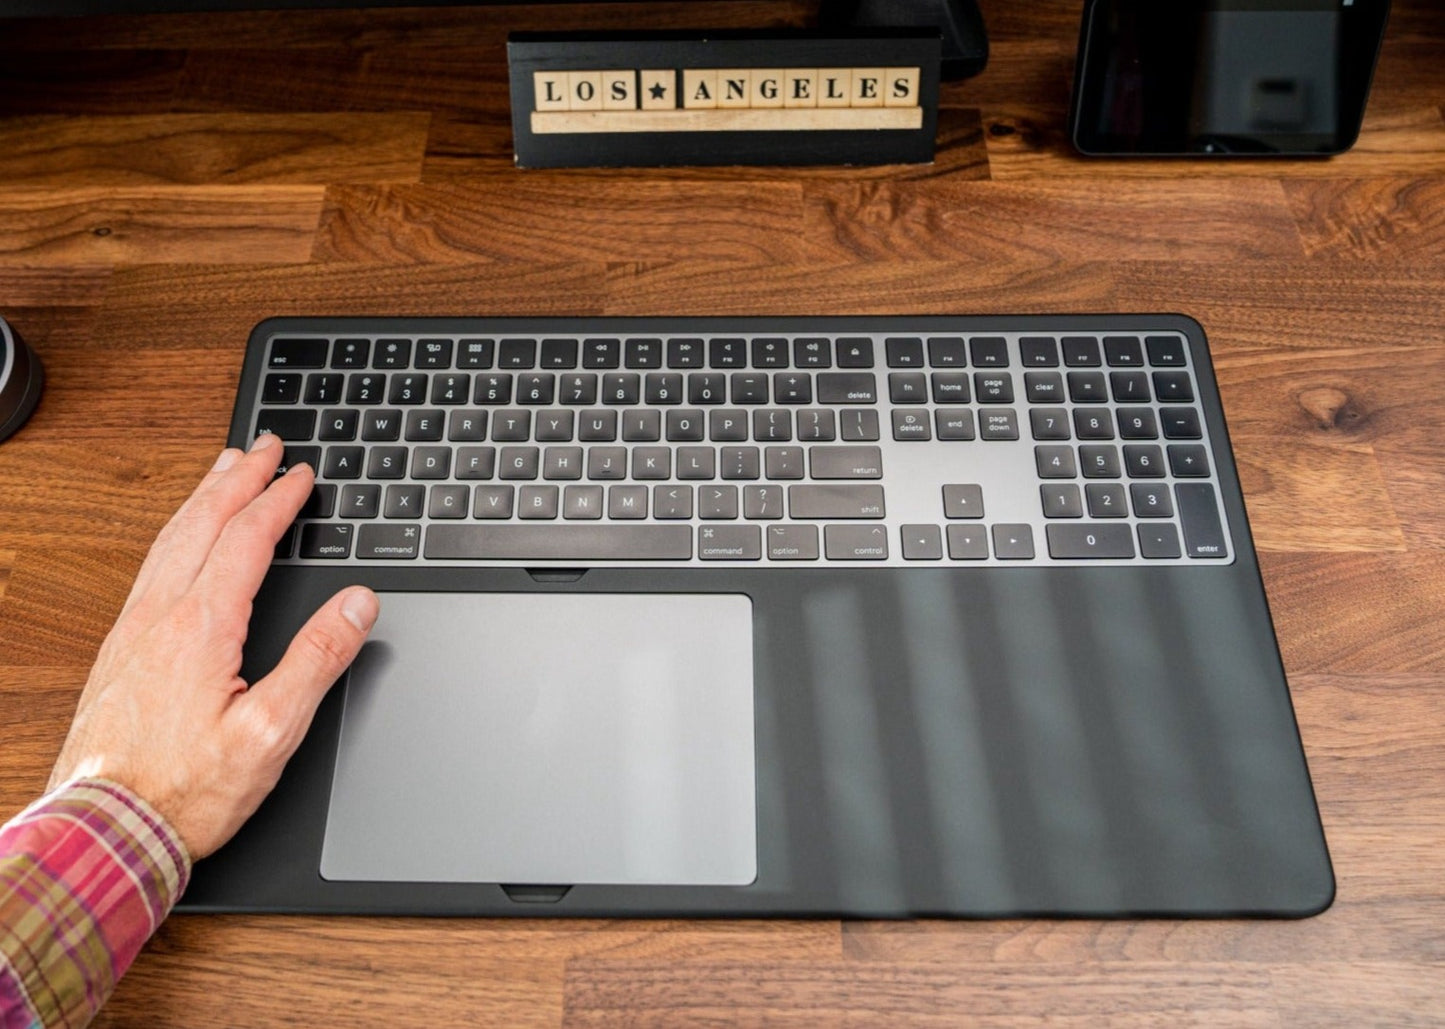 The Pro Magic Keyboard and Trackpad Tray